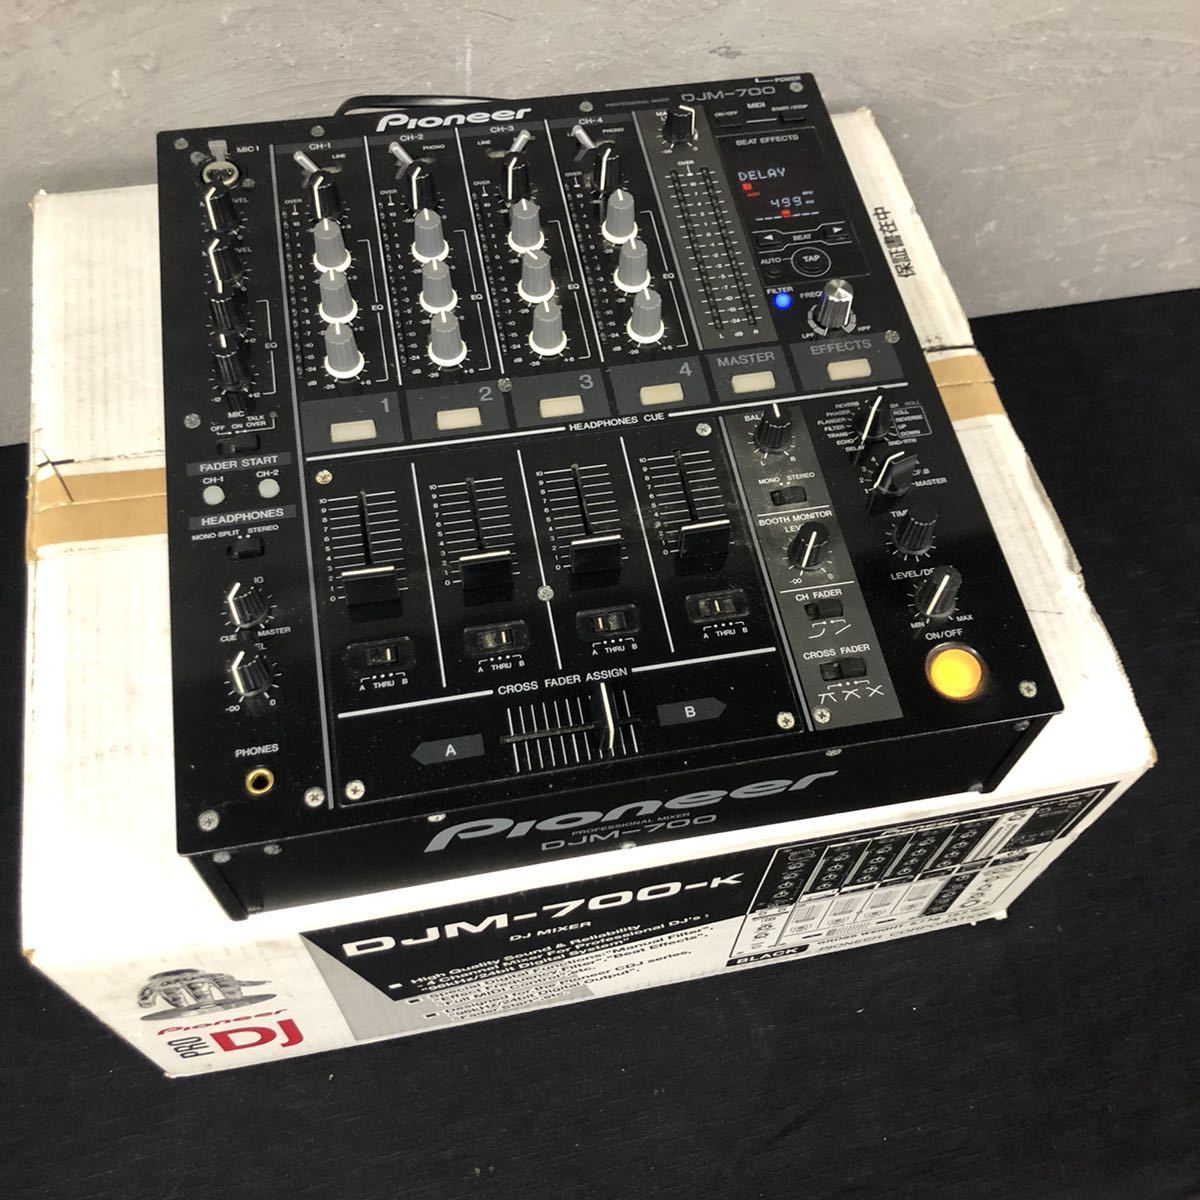 F-0-re] Pioneer DJM-700 音出し確認済み 動作良好 元箱付き 中古品 DJ